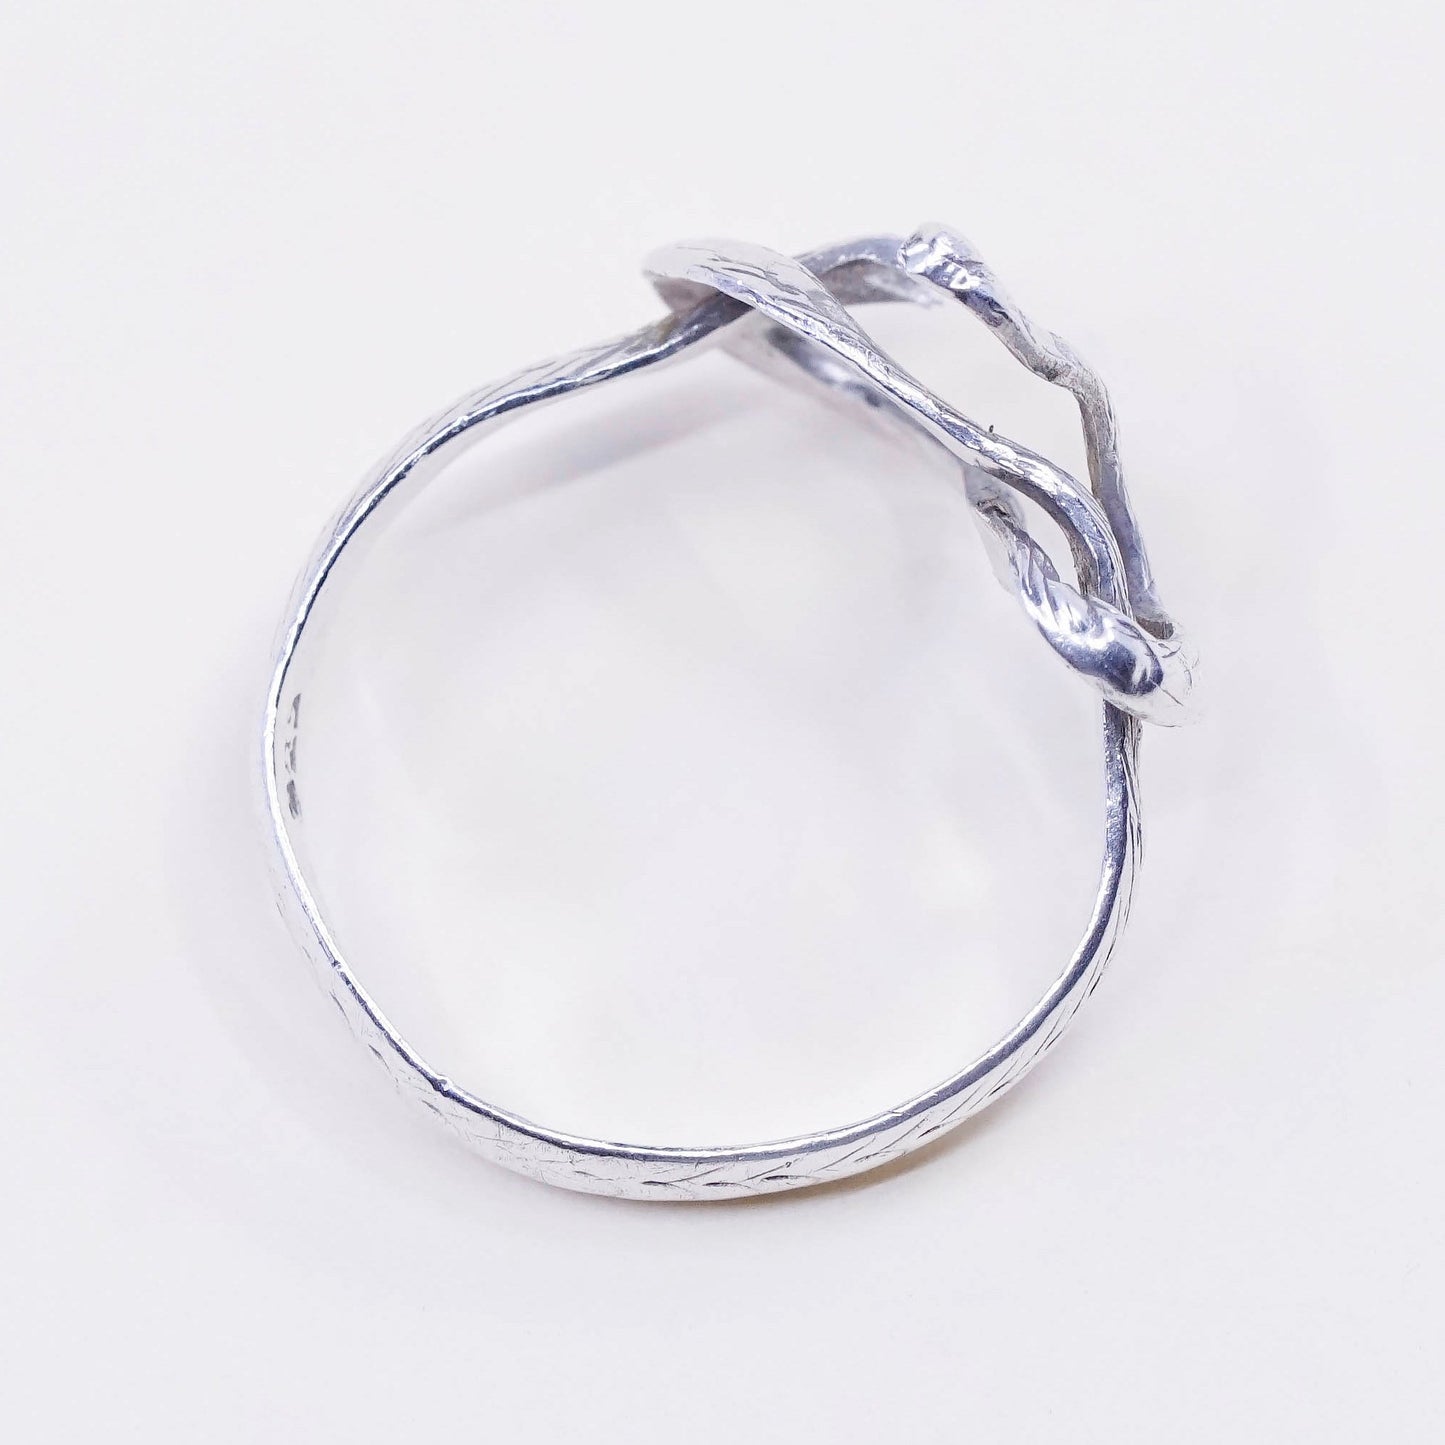 Size 7.75, vintage Sterling silver handmade ring, 925 silver snake band